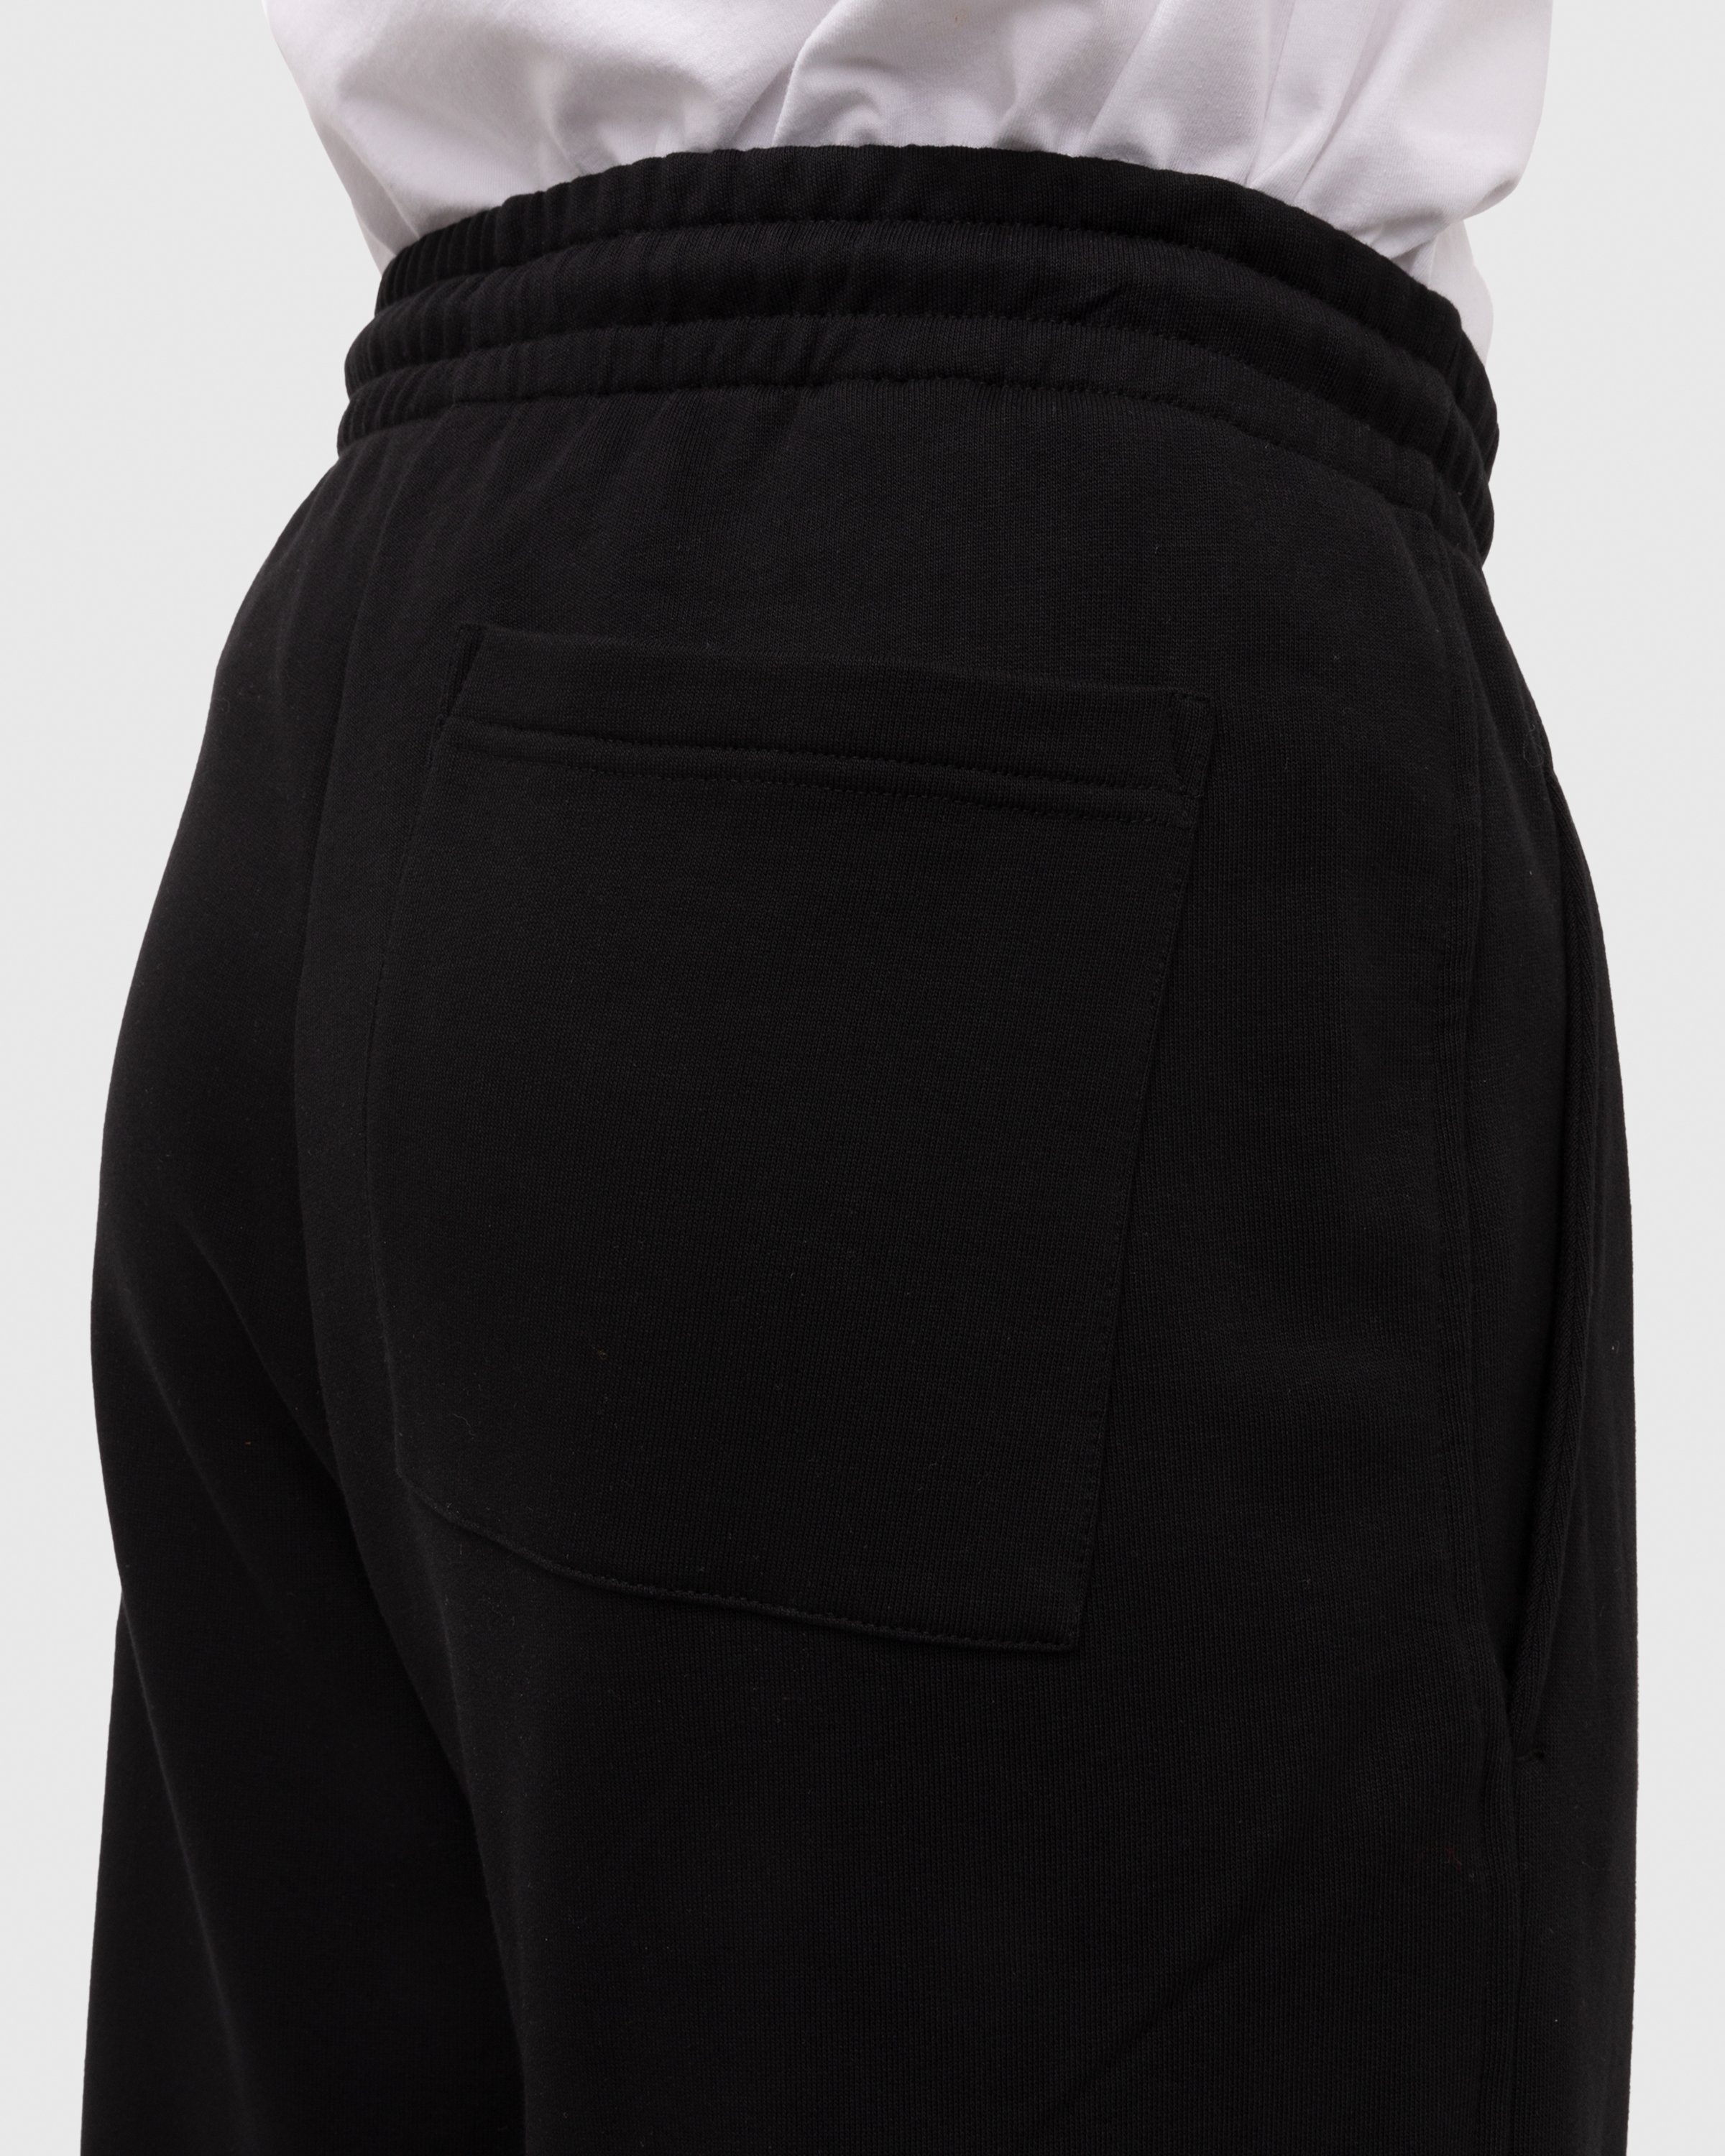 Dries van Noten – Hamer Sweatpants Black - Sweatpants - Black - Image 5